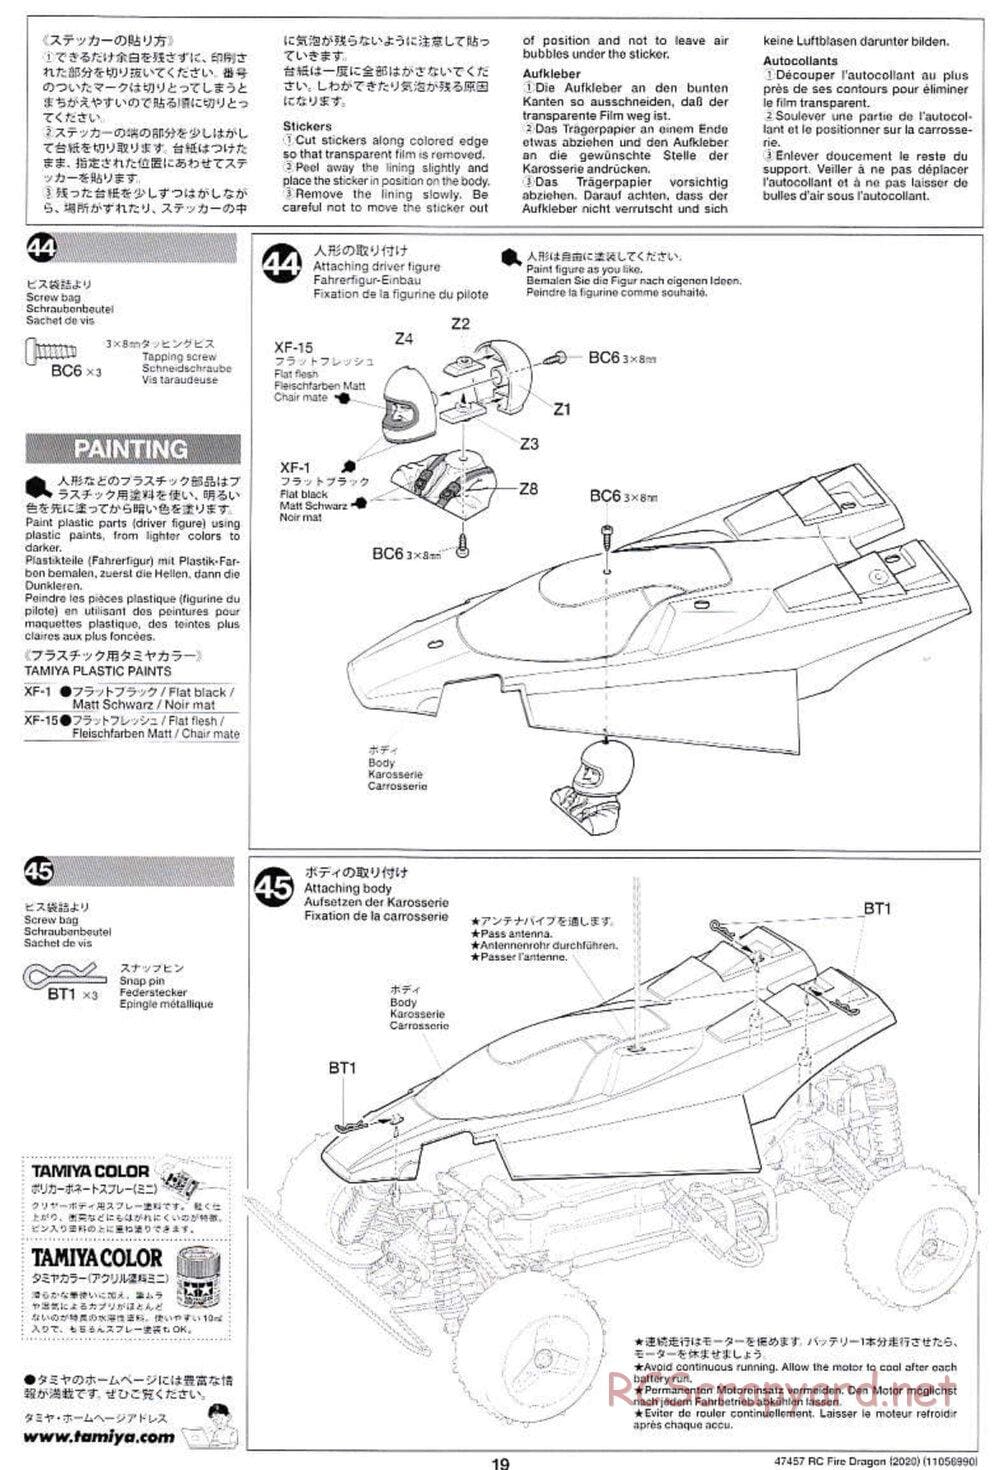 Tamiya - Fire Dragon (2020) Chassis - Manual - Page 19